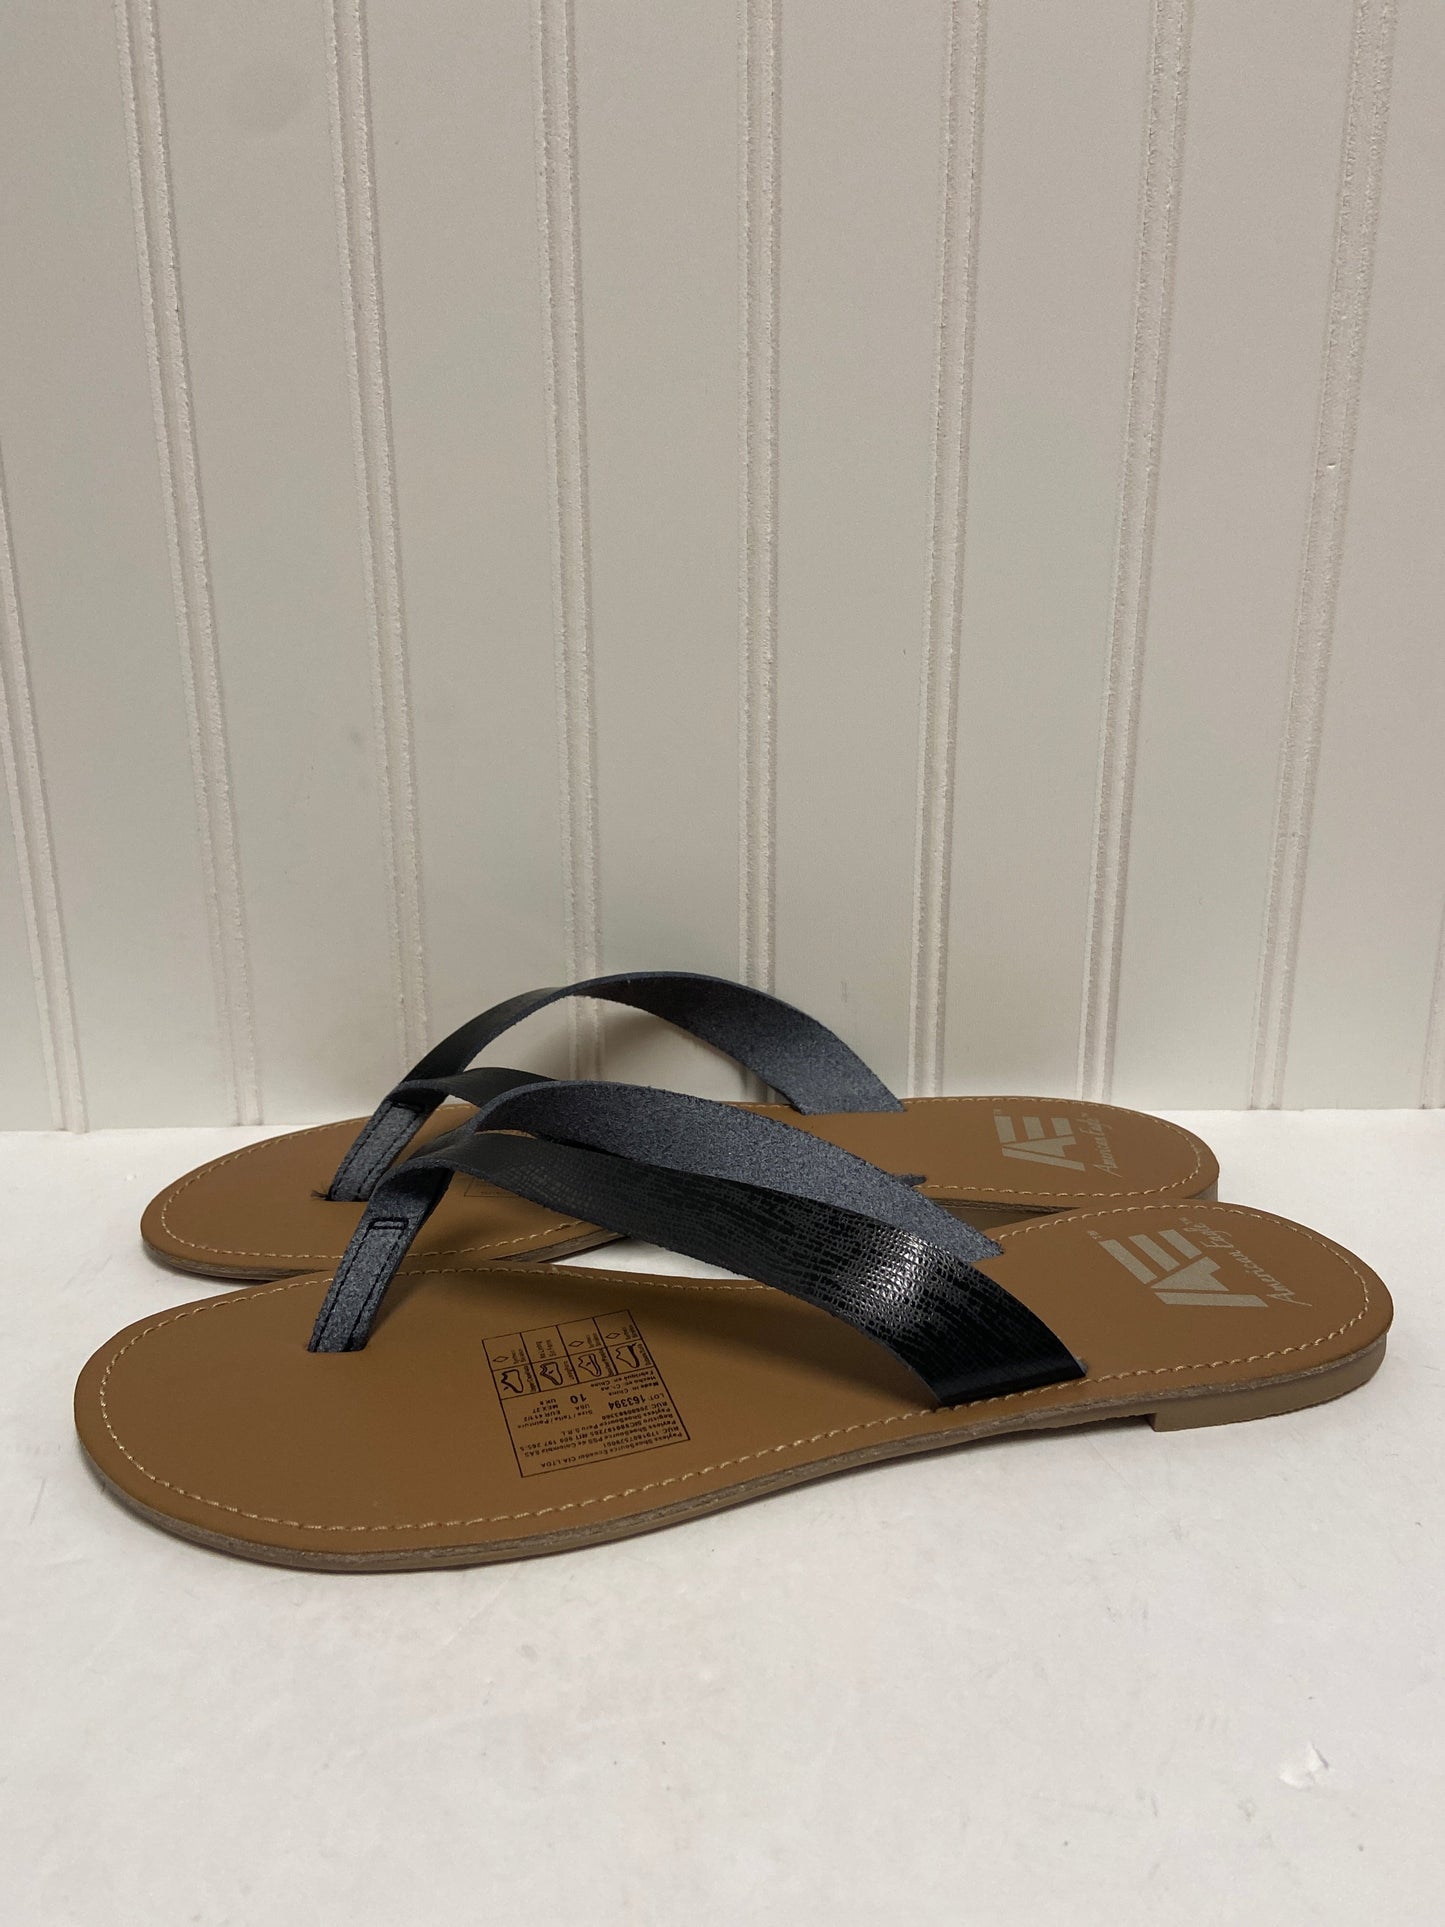 Sandals Flip Flops By American Eagle  Size: 10